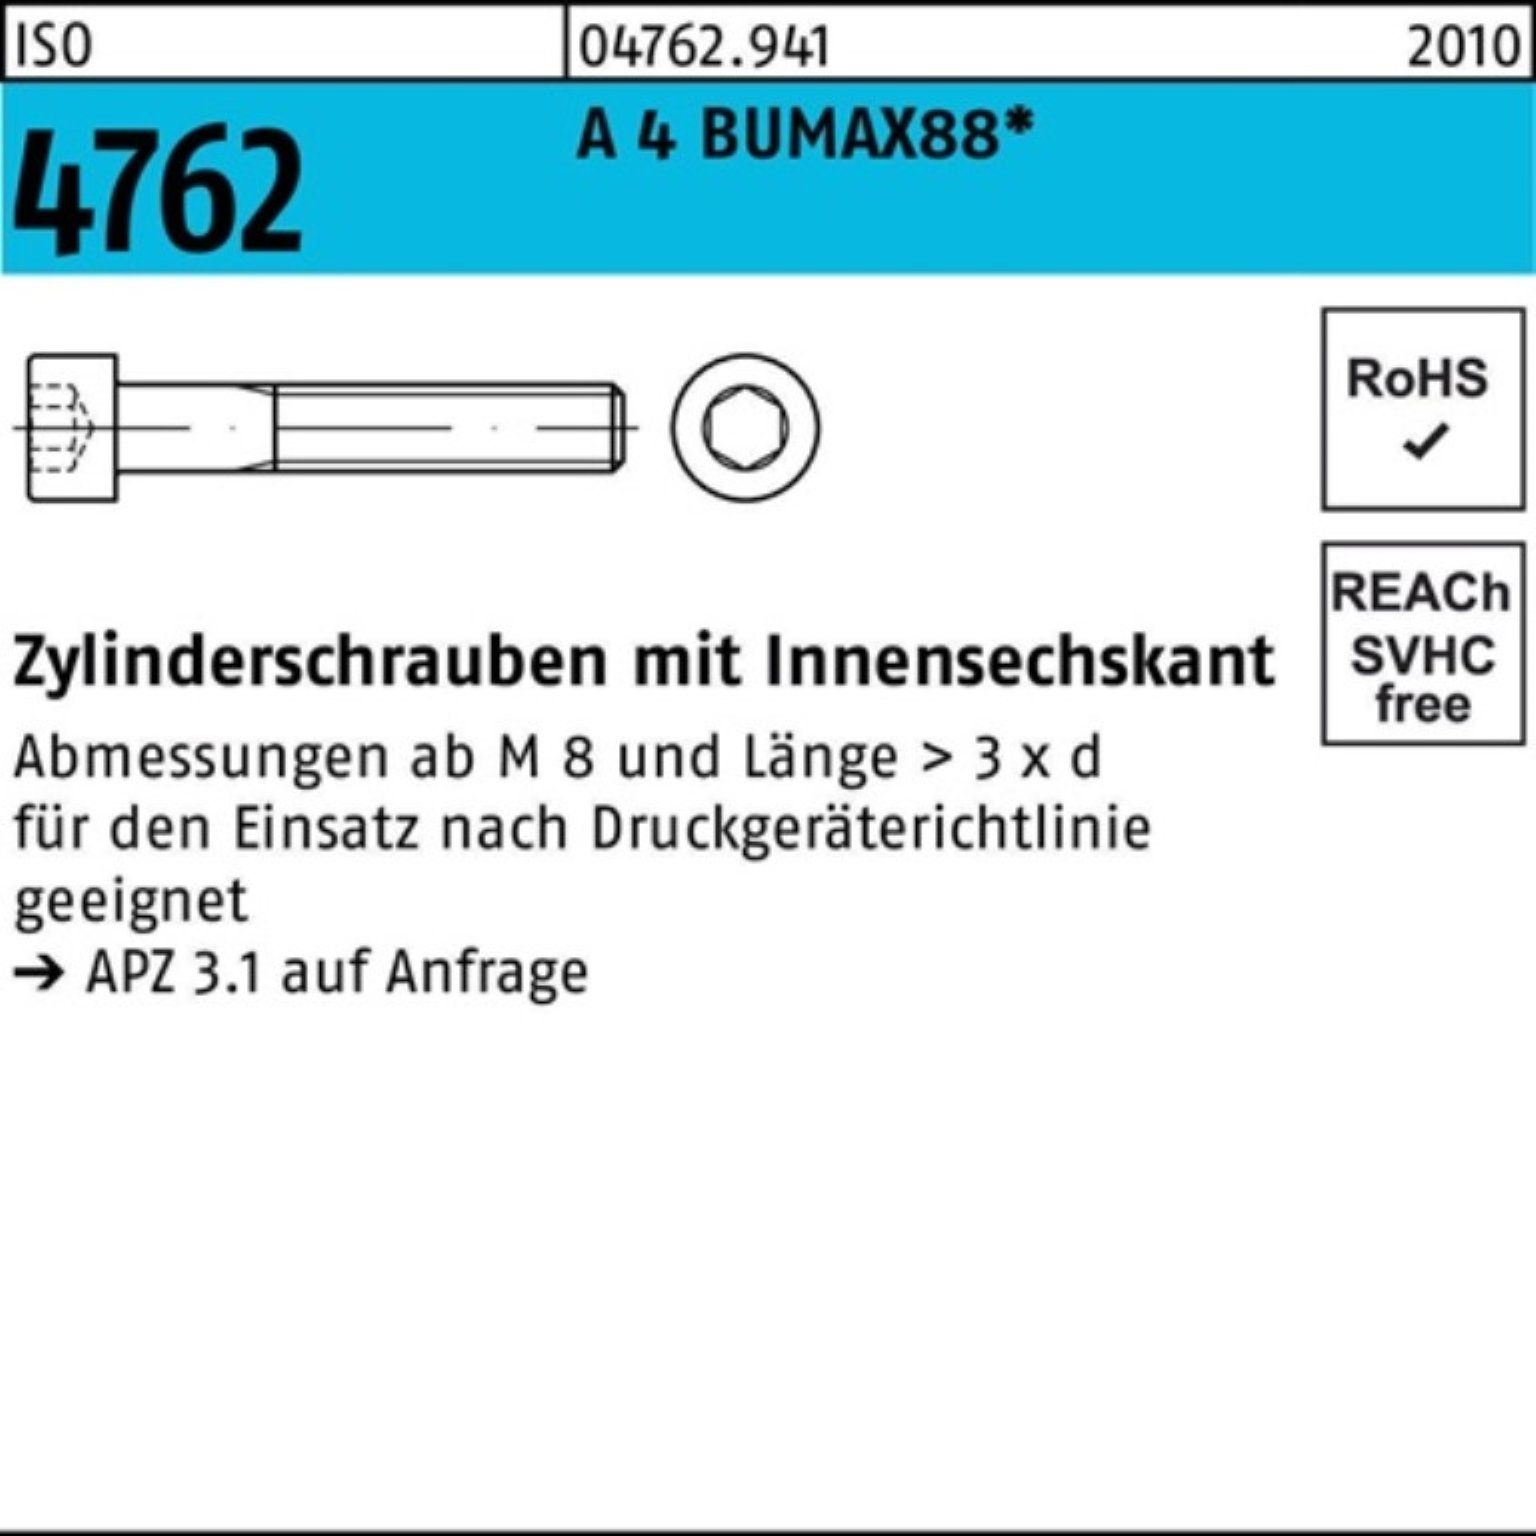 Bufab Zylinderschraube 100er BUMAX88 Innen-6kt M8x 4762 S ISO A 4 Pack 50 Zylinderschraube 40